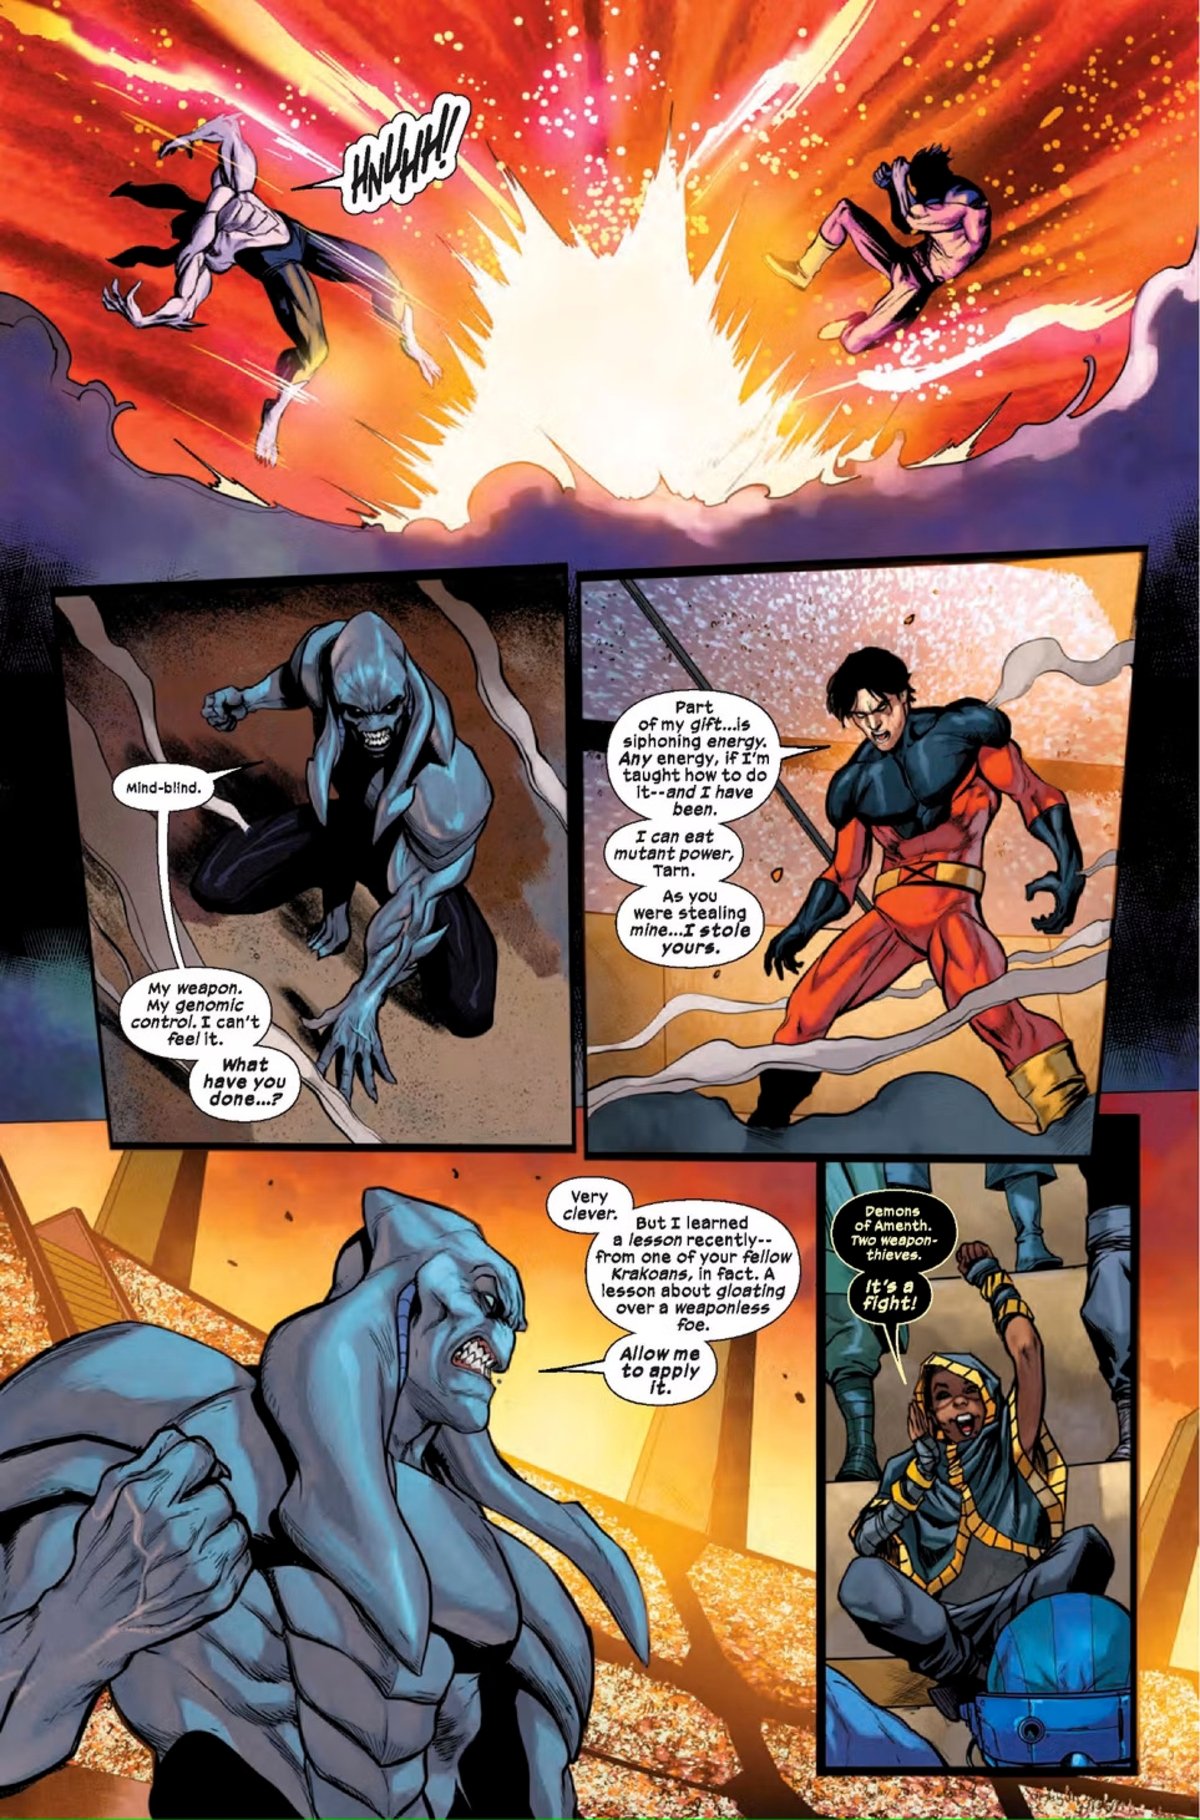 X-Men-Red-Vulcan-vs-Tarn